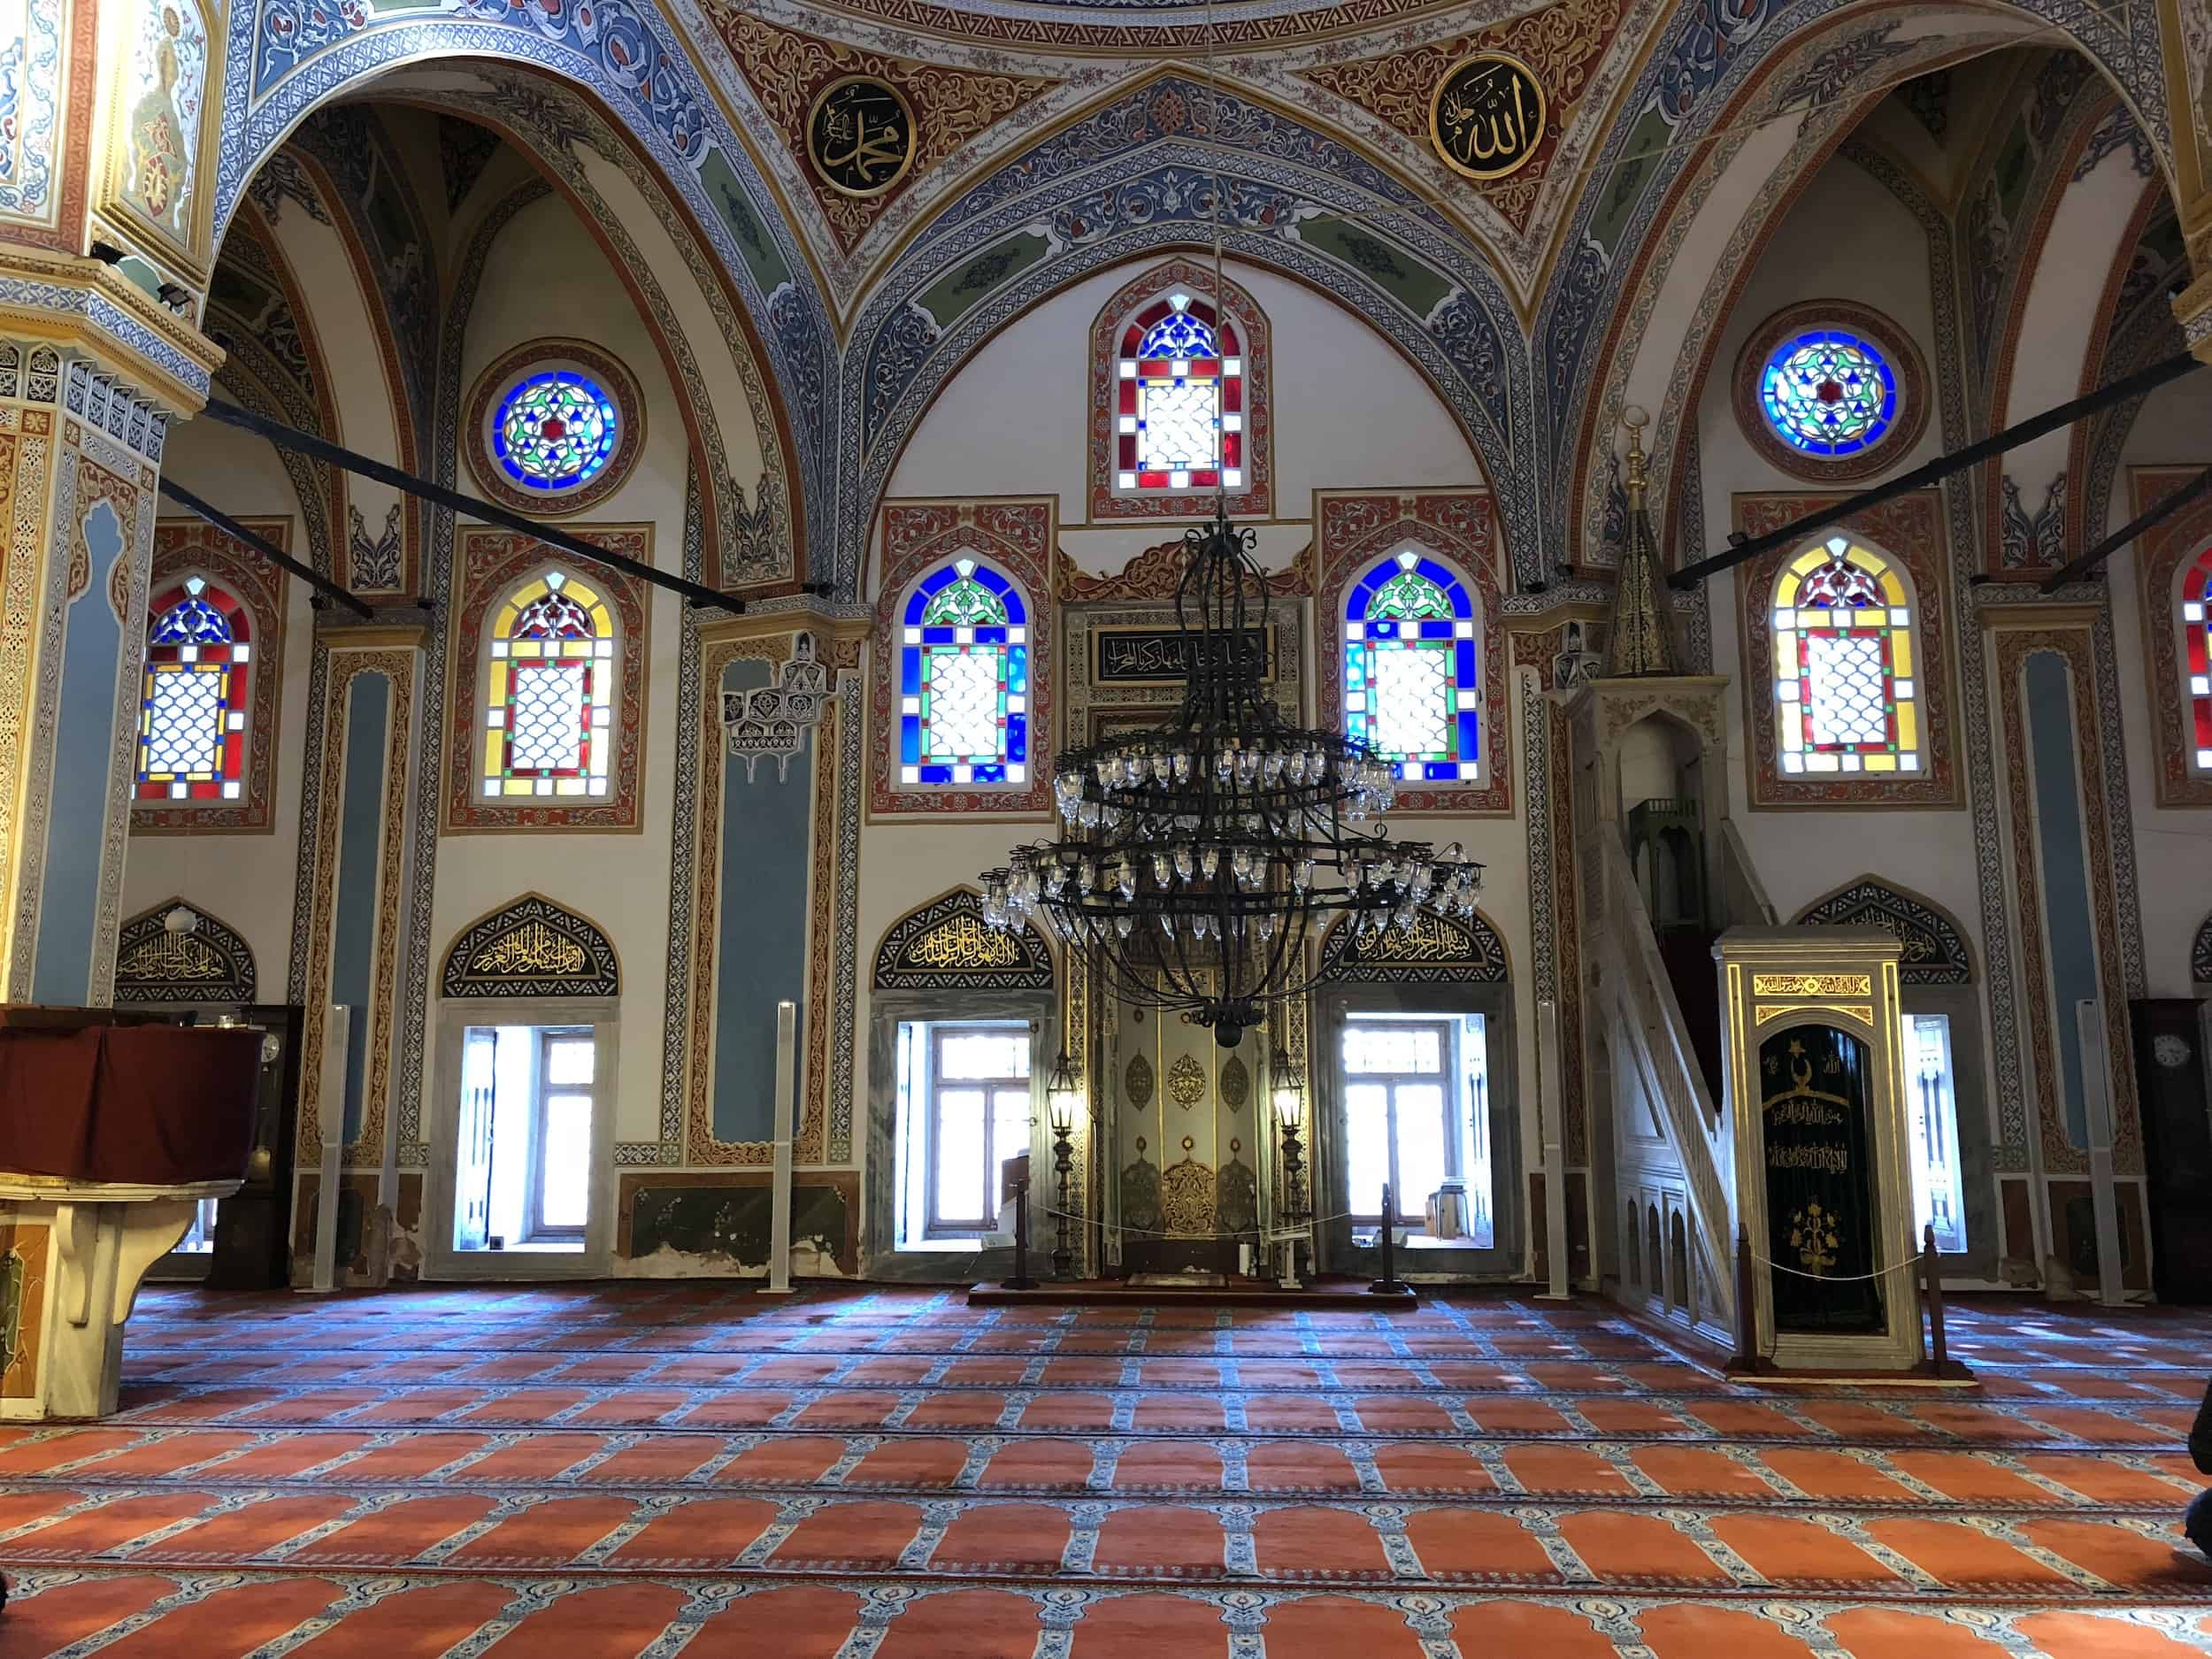 Prayer hall of the Sinan Pasha Mosque in Beşiktaş, Istanbul, Turkey